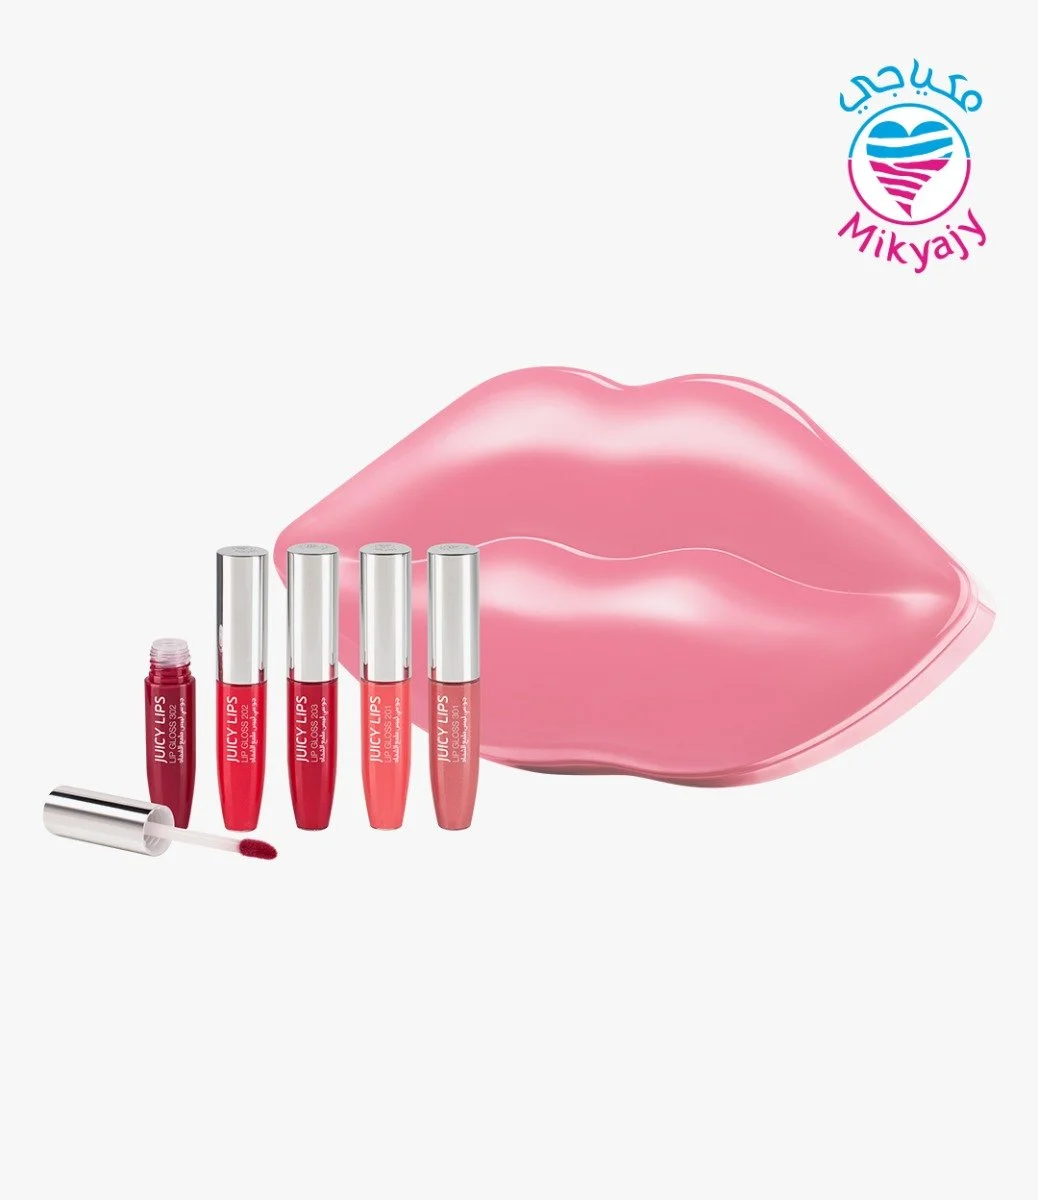 Juicy Lips Lipstick Set by Mikyajy*